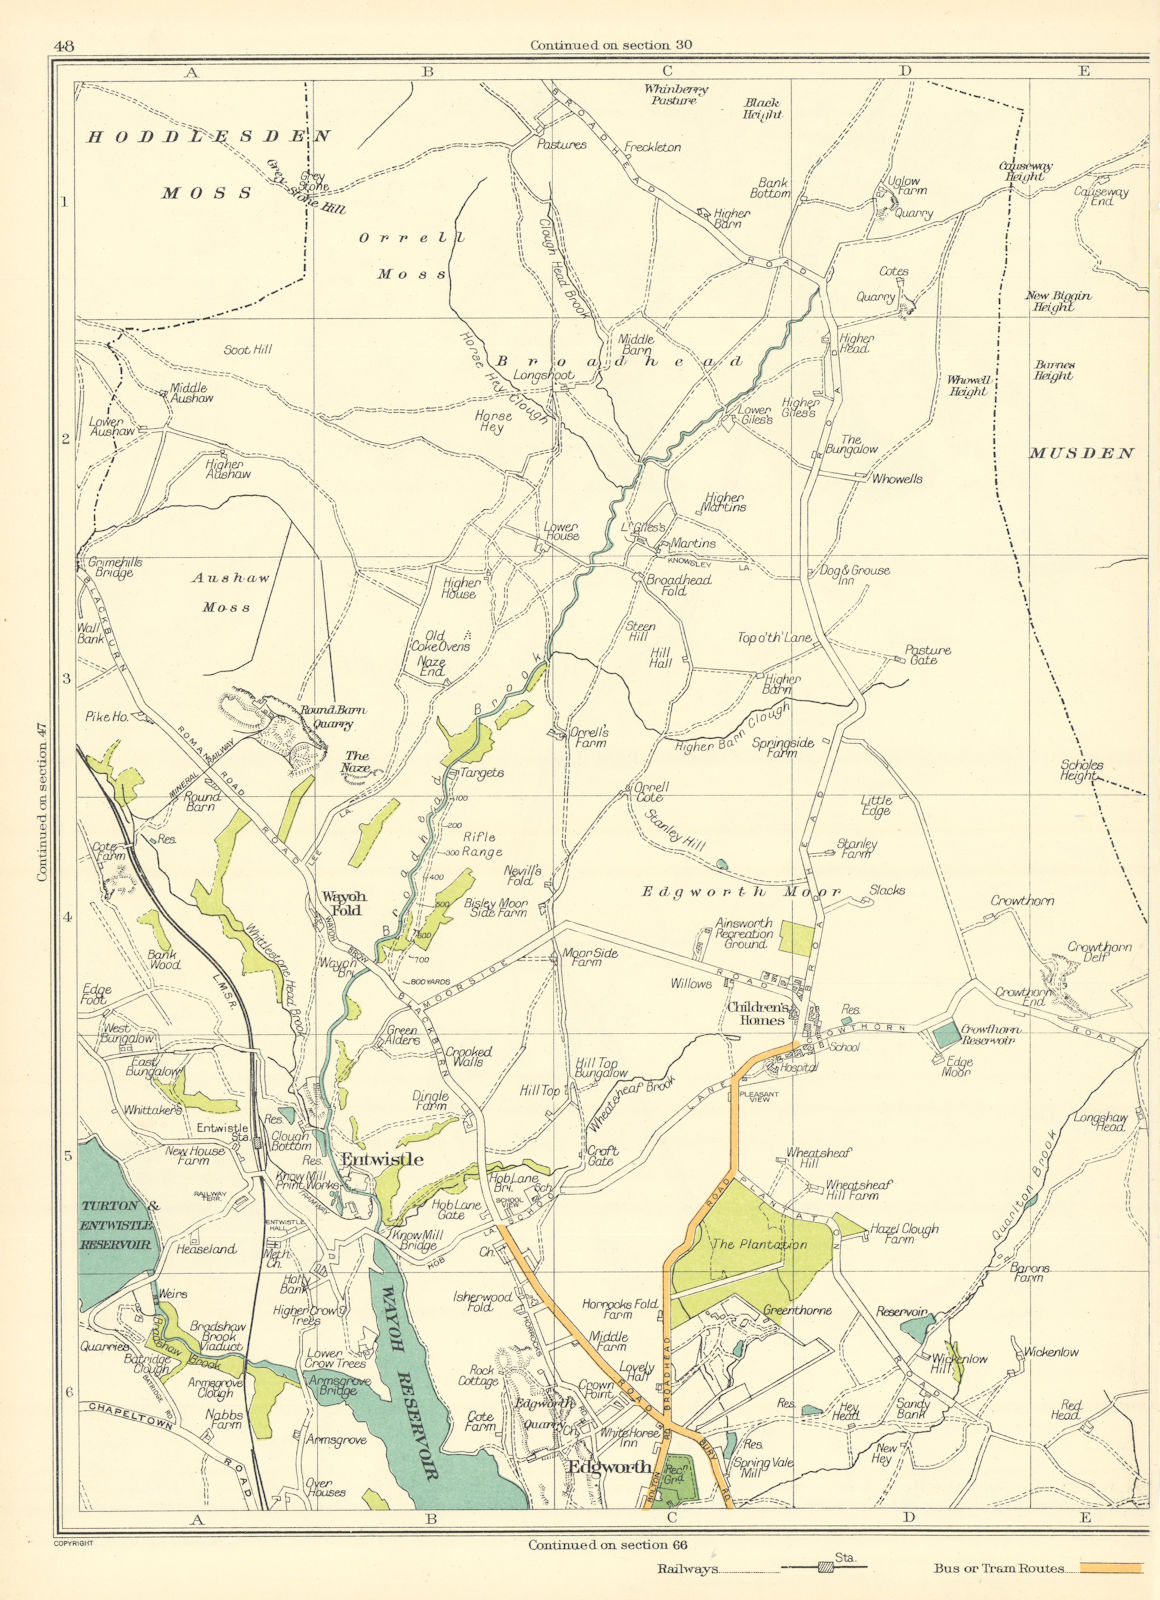 LANCASHIRE Entwistle Wayoh Fold Edgworth Orrell Moss Edgworth Moor 1935 map